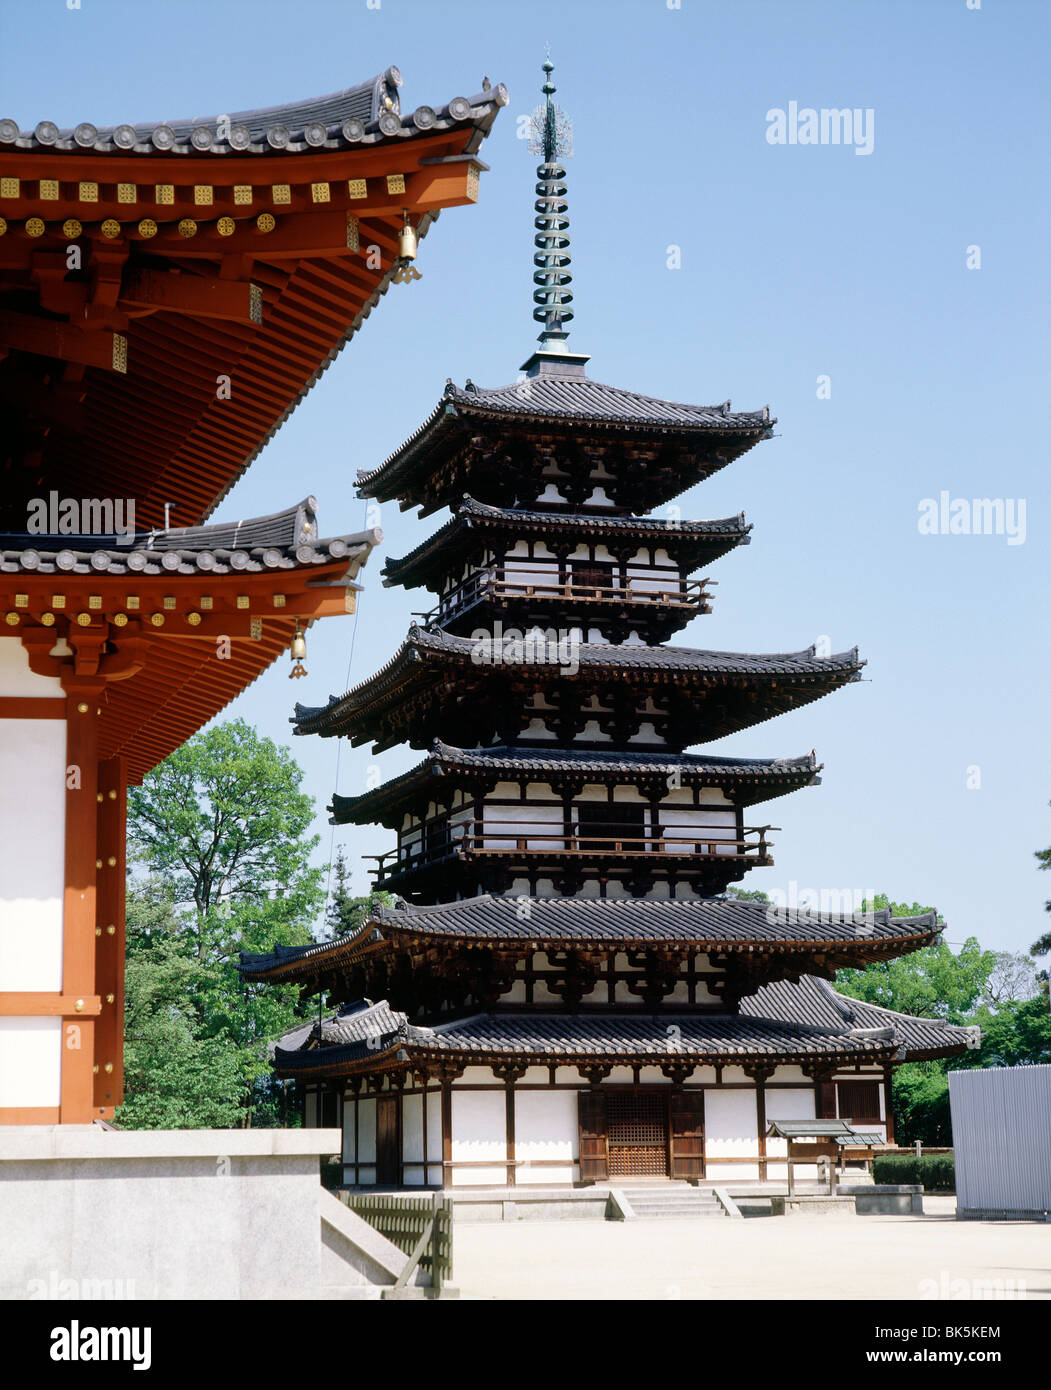 Yakushiji Tempel, erbaut von Kaiser Temmu im späten 7. Jahrhundert, Nara, UNESCO World Heritage Site, Japan, Asien Stockfoto